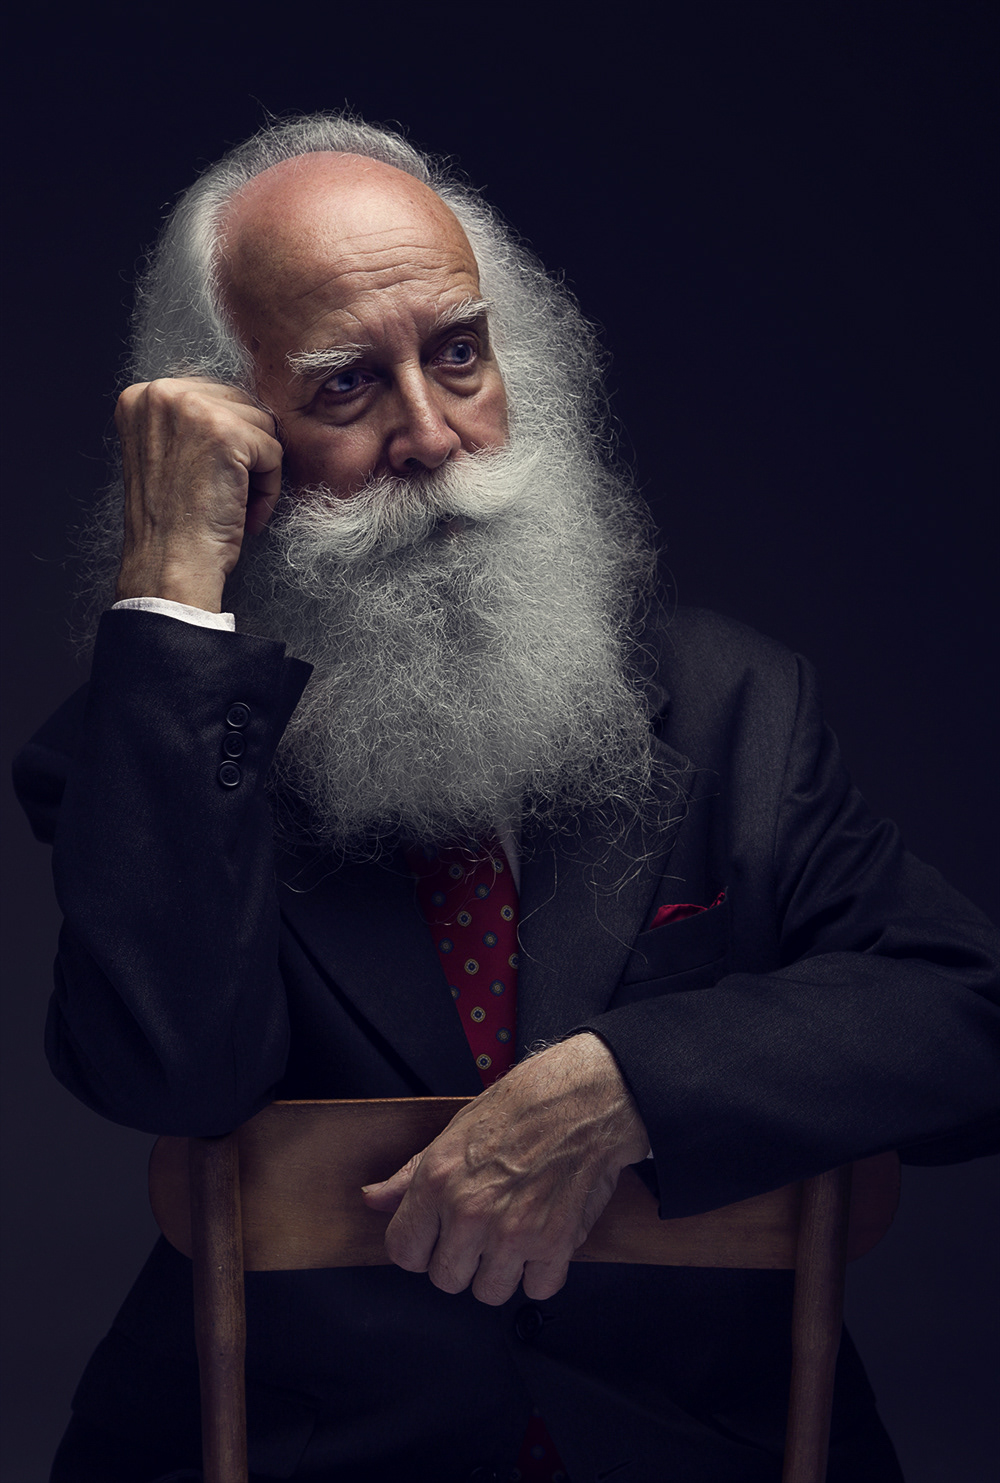 retouch oldman beard male model photographry